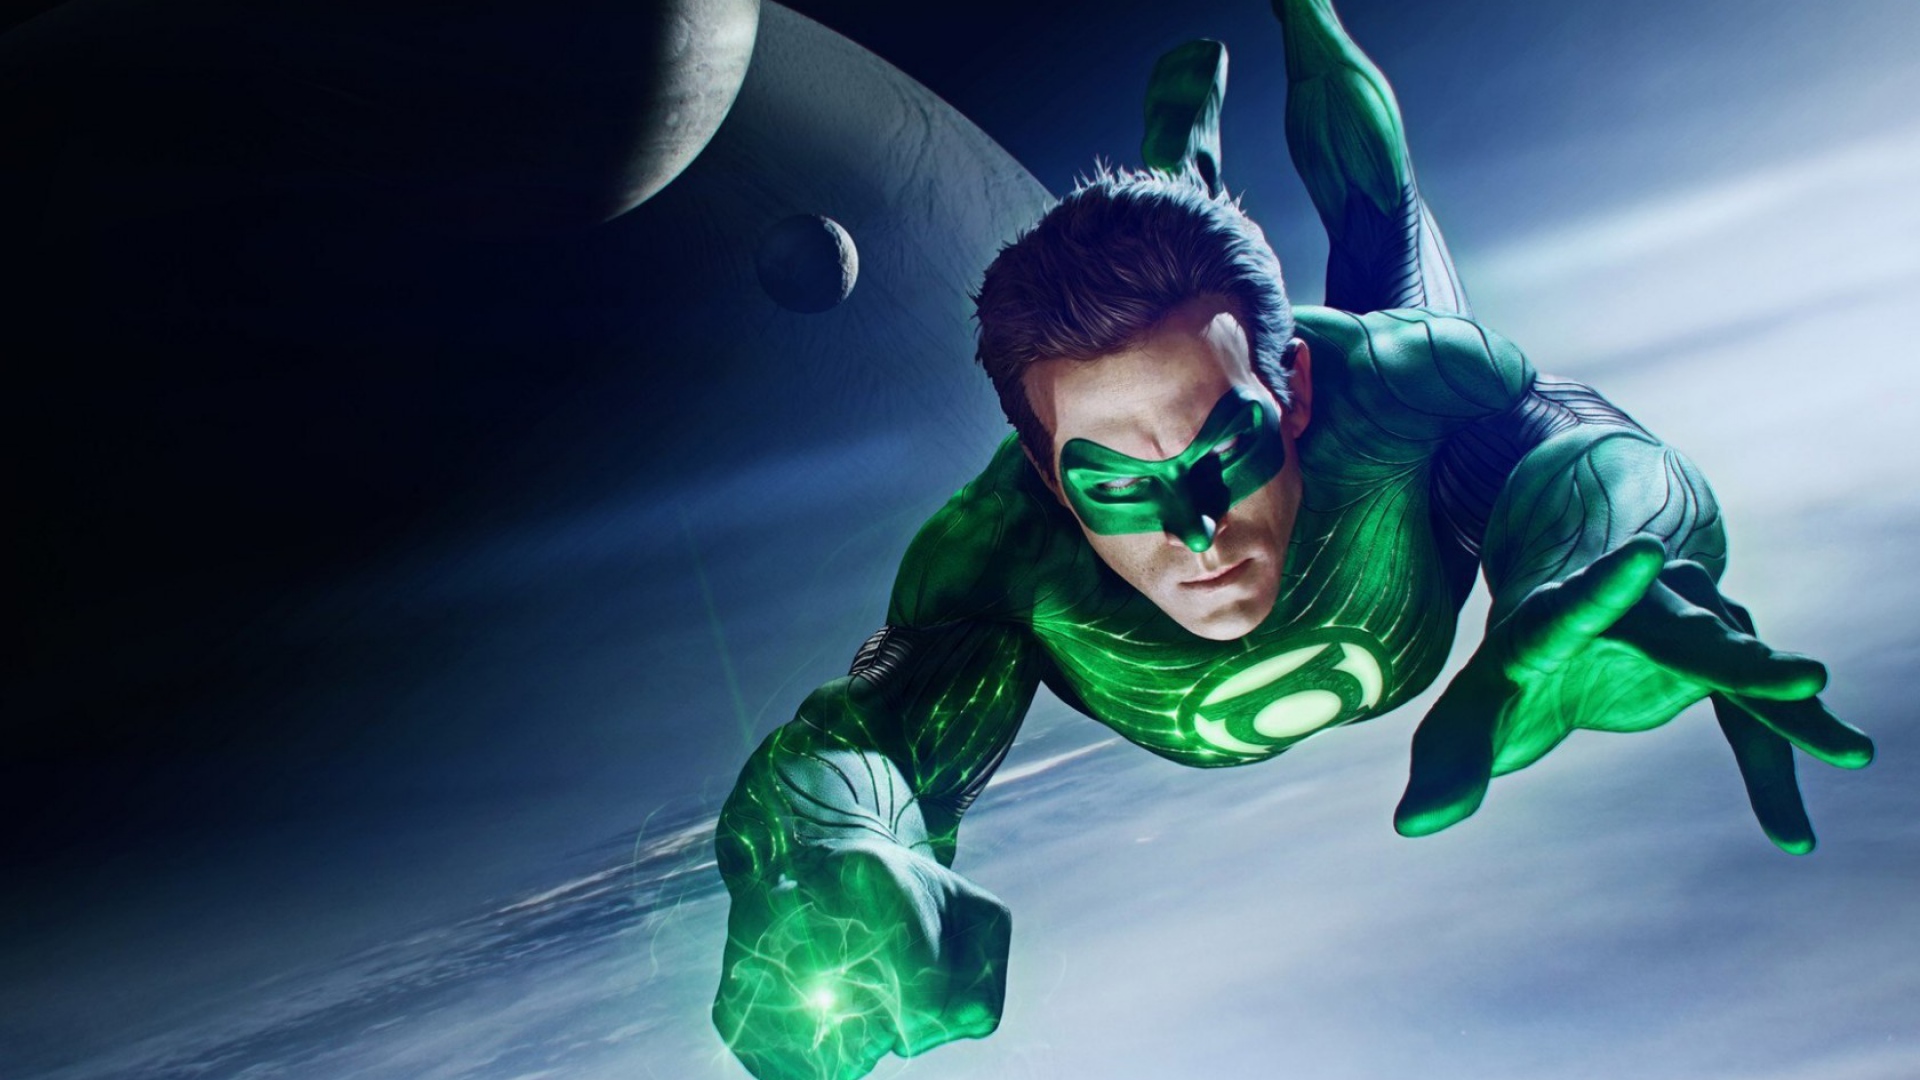 green lantern wallpaper,green lantern,fictional character,batman,justice league,superhero